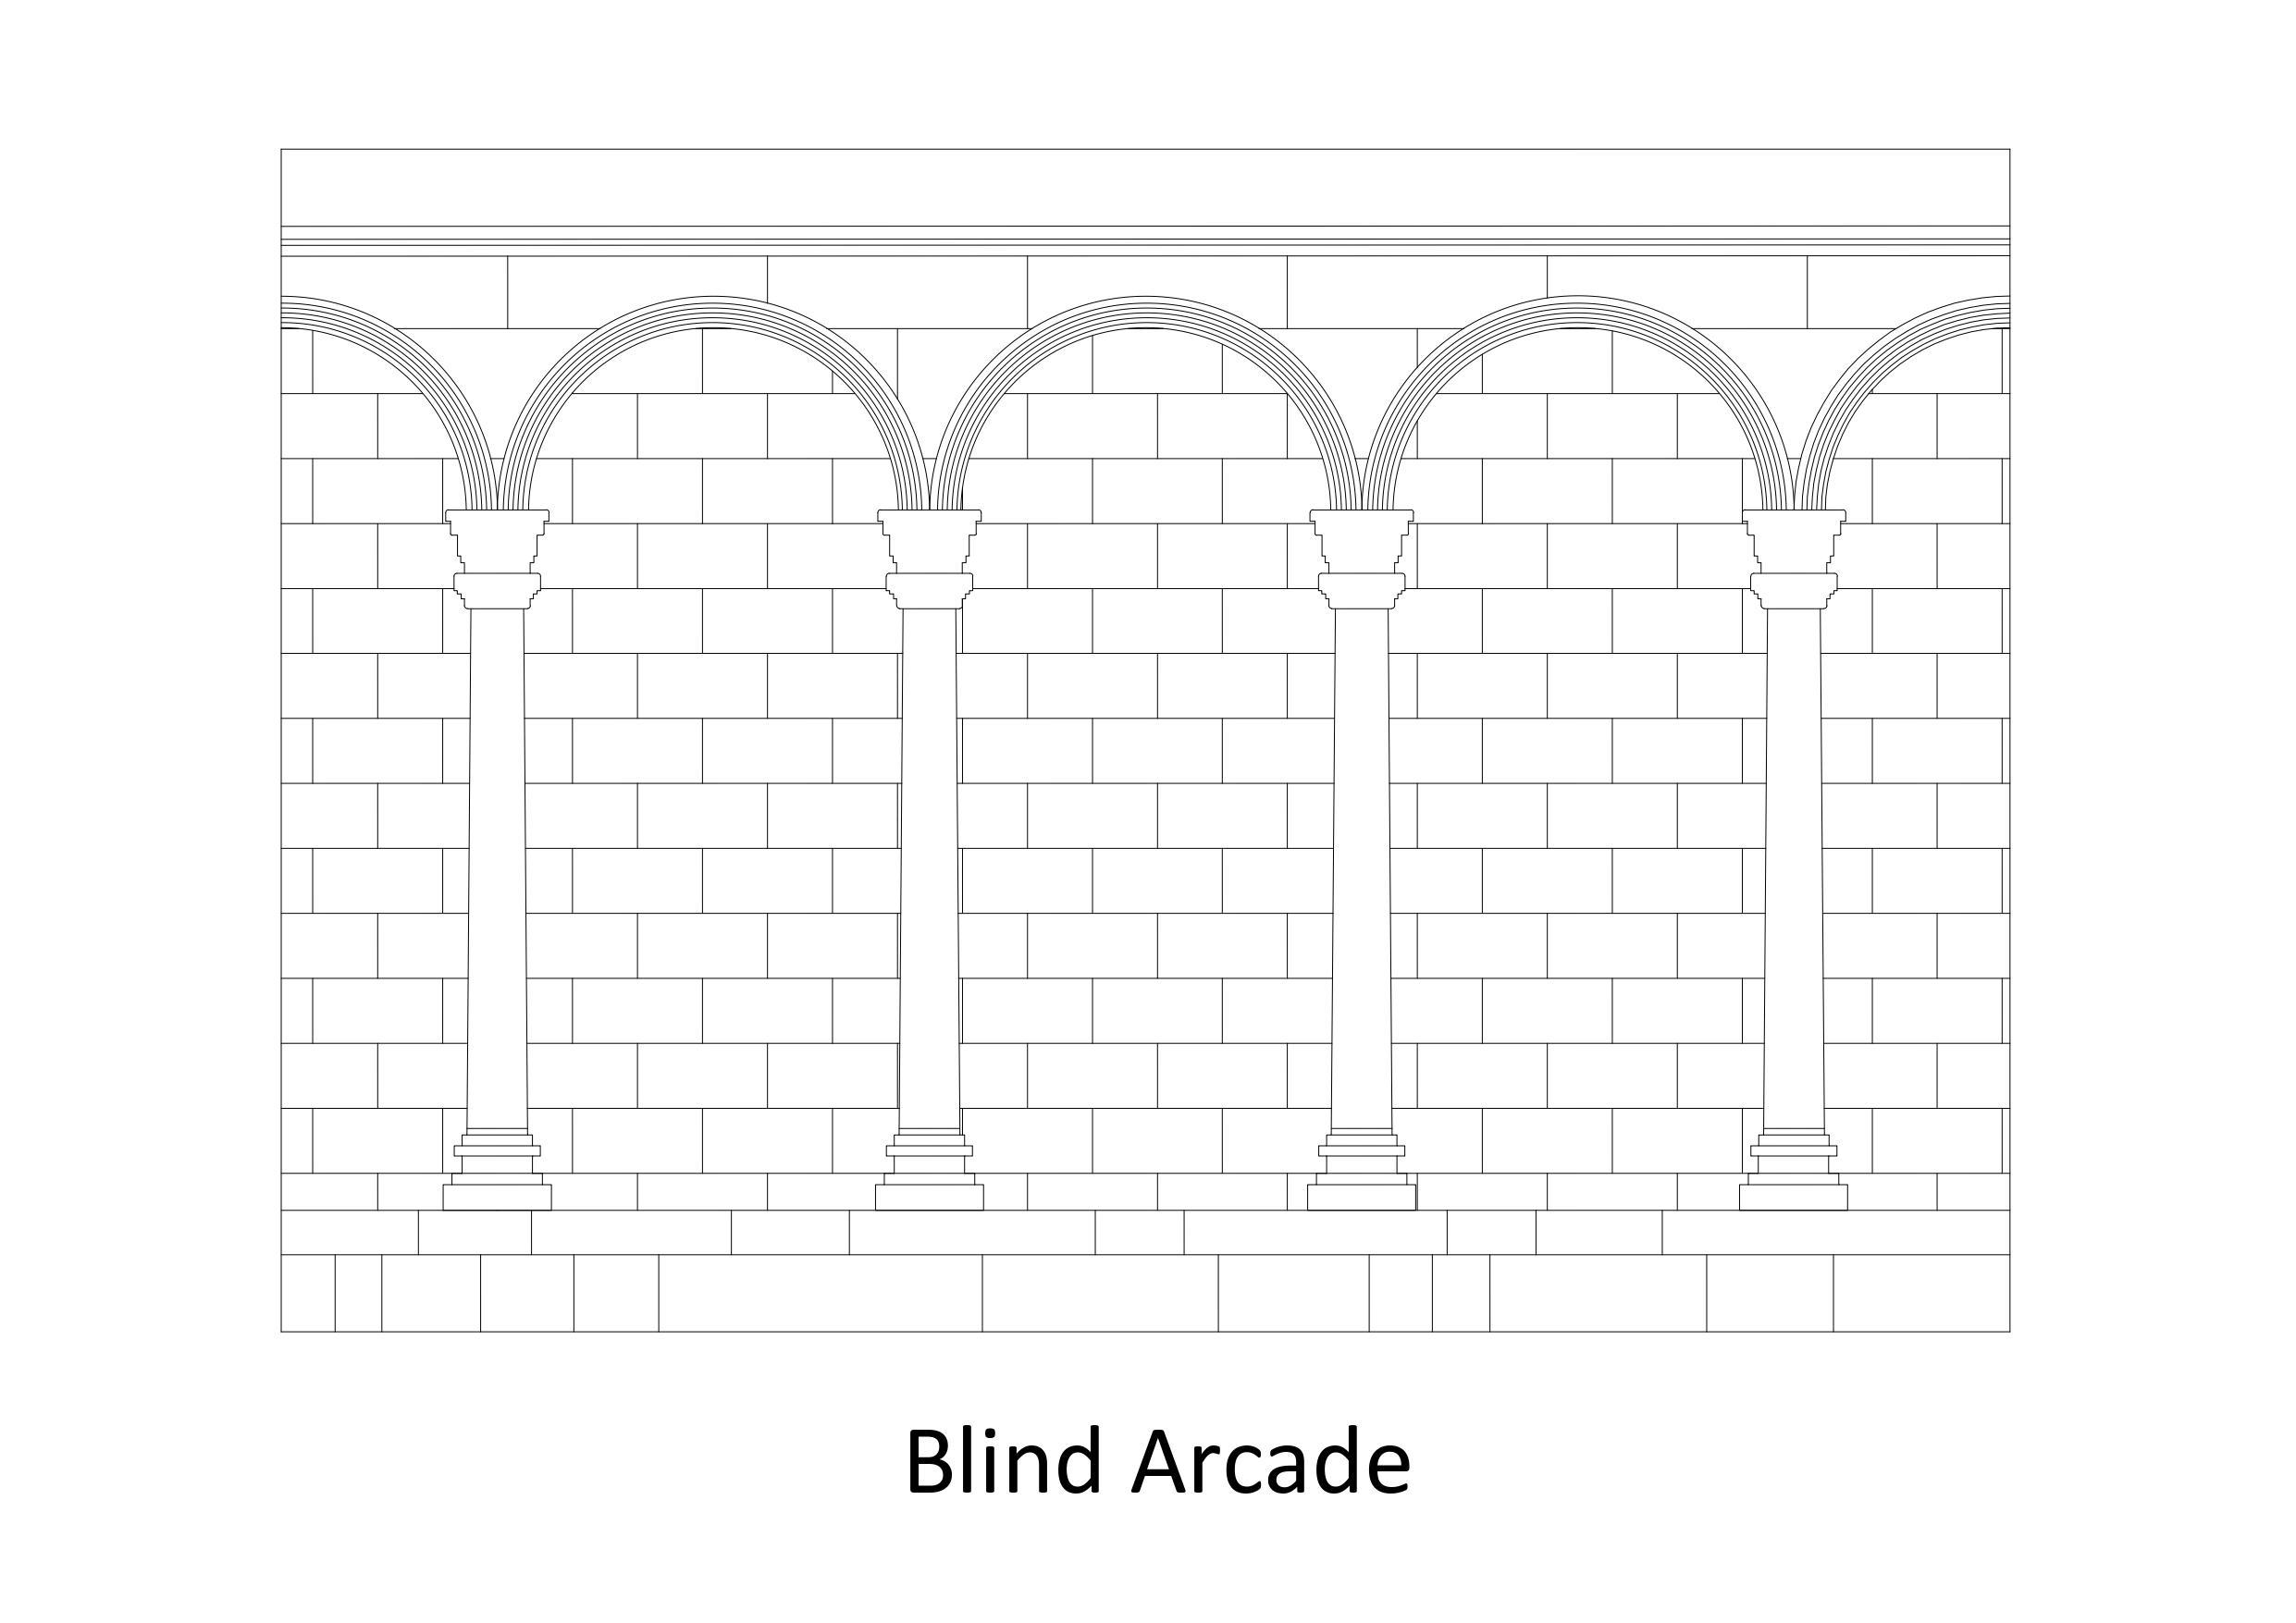 Blind Arcade in architecture
